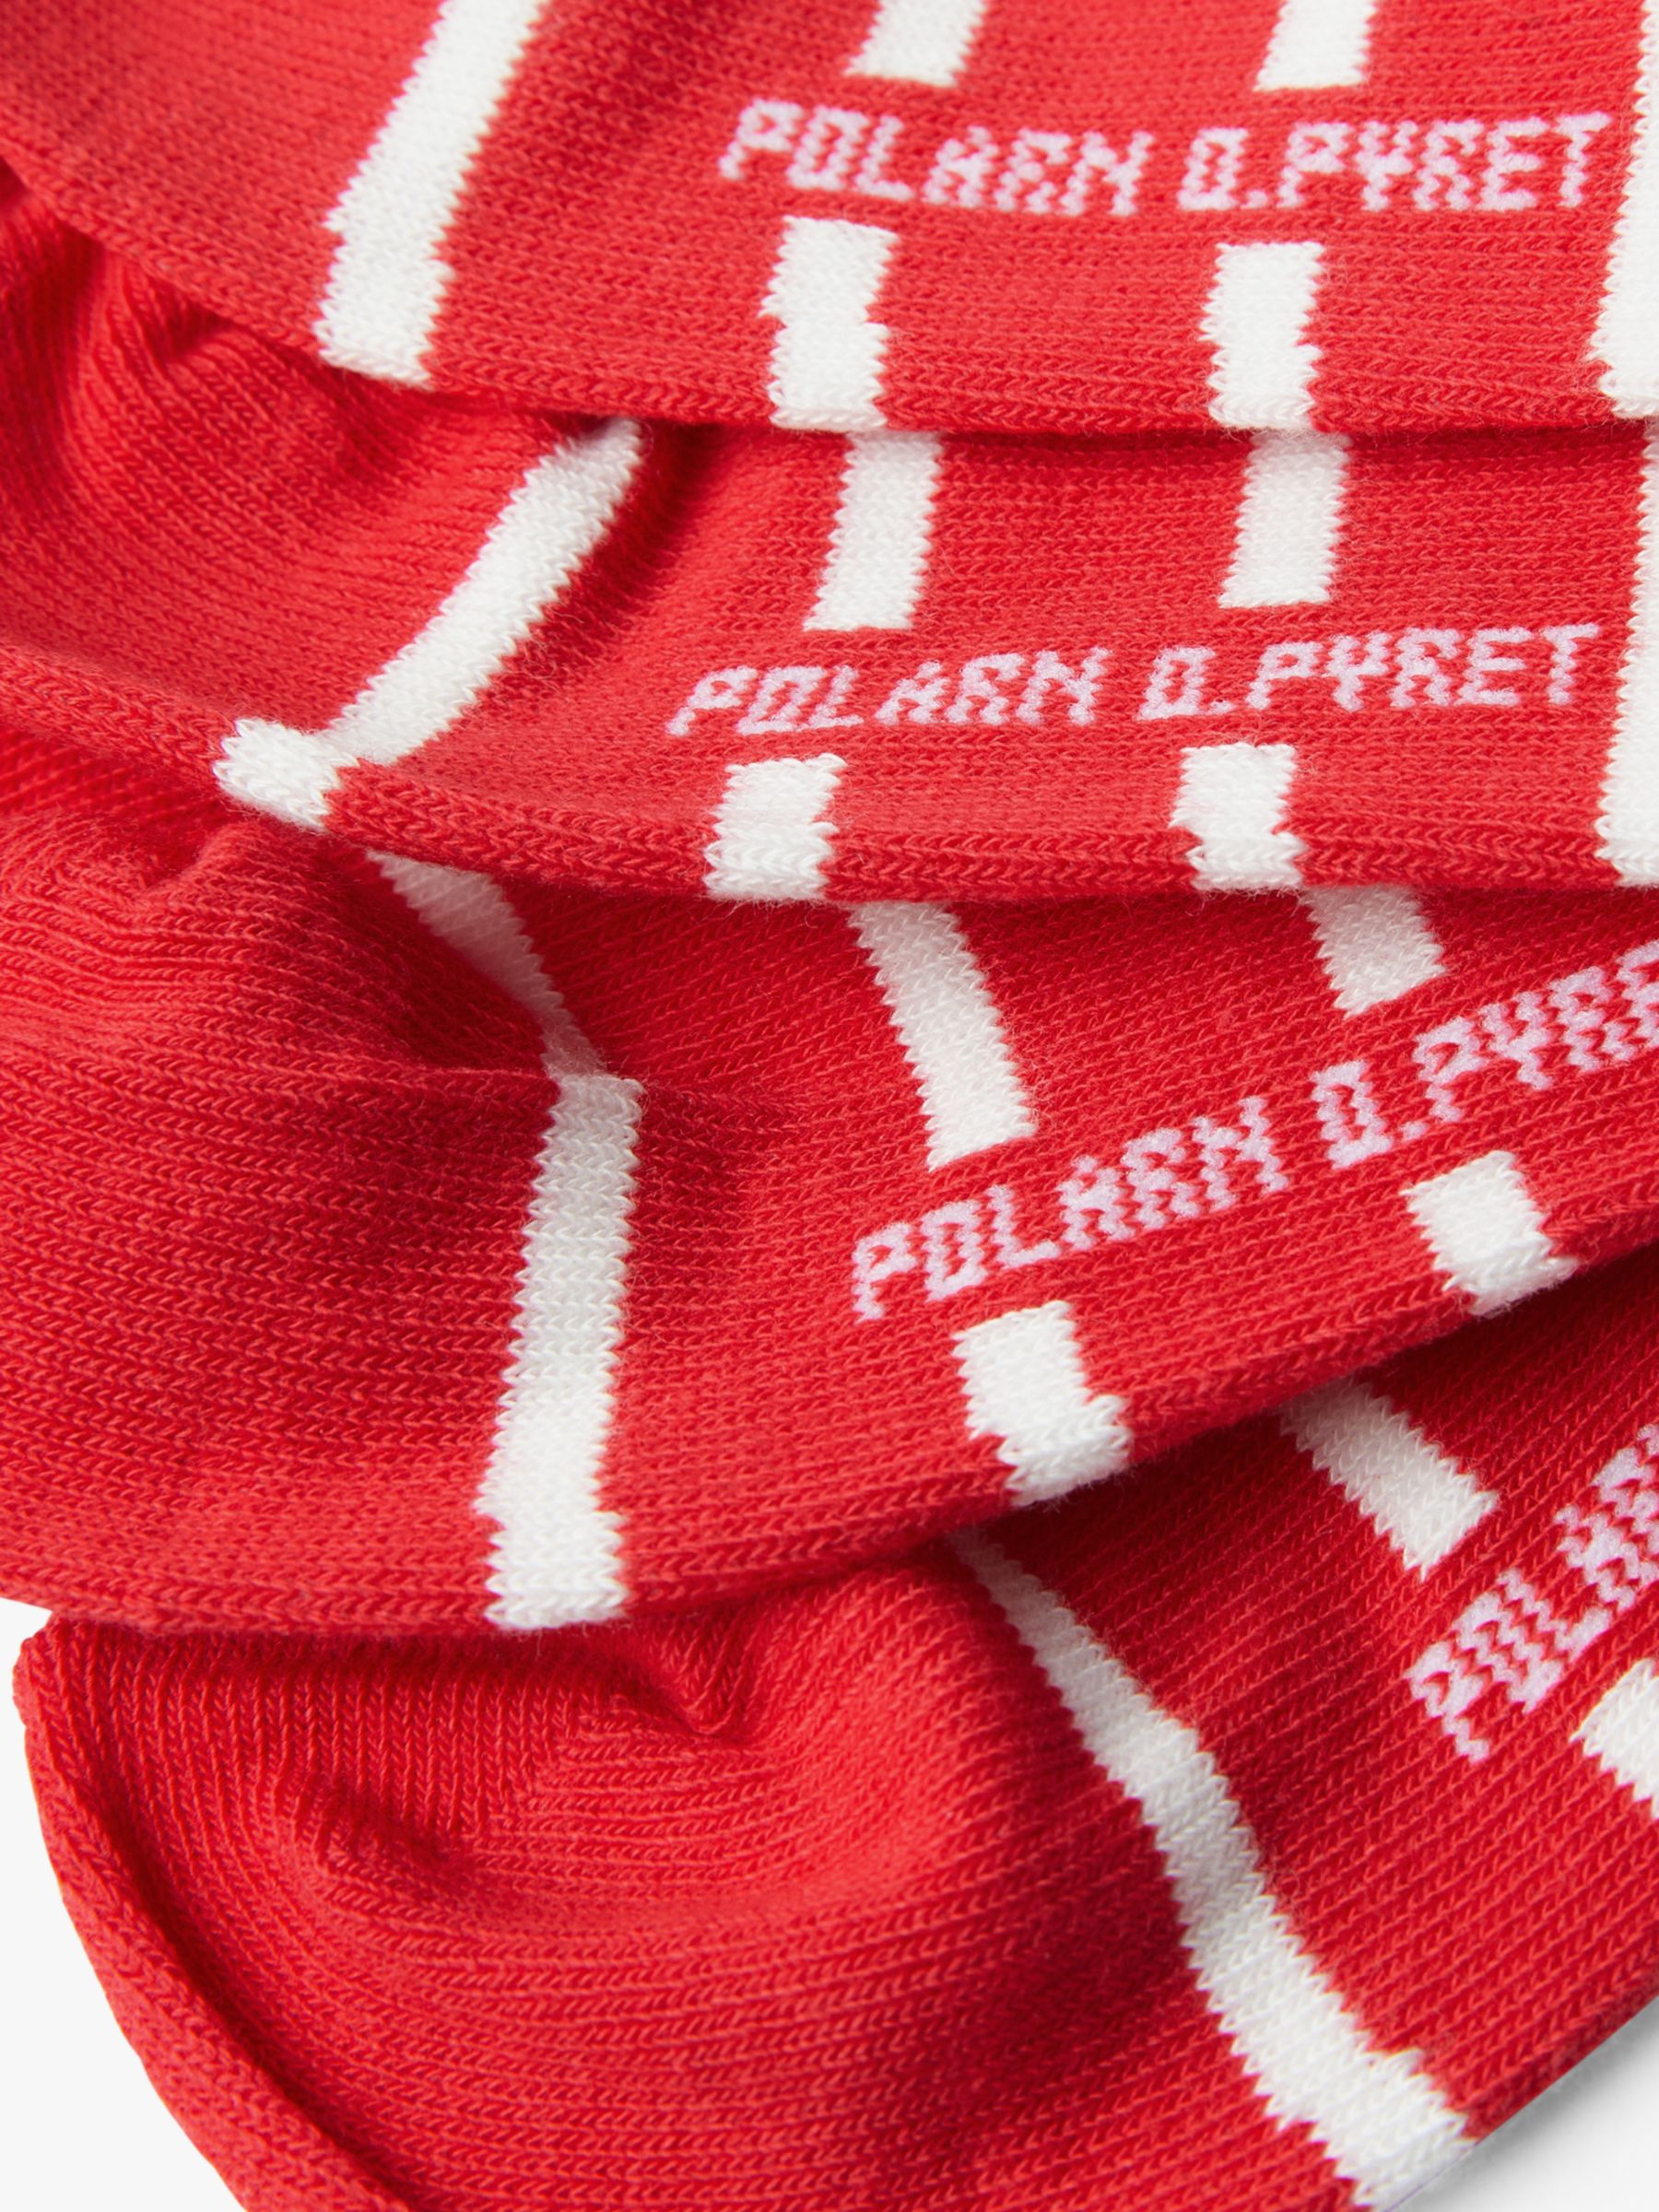 Polarn O. Pyret Kids' Stripe Socks, Pack of 2, Red, 2-4 years